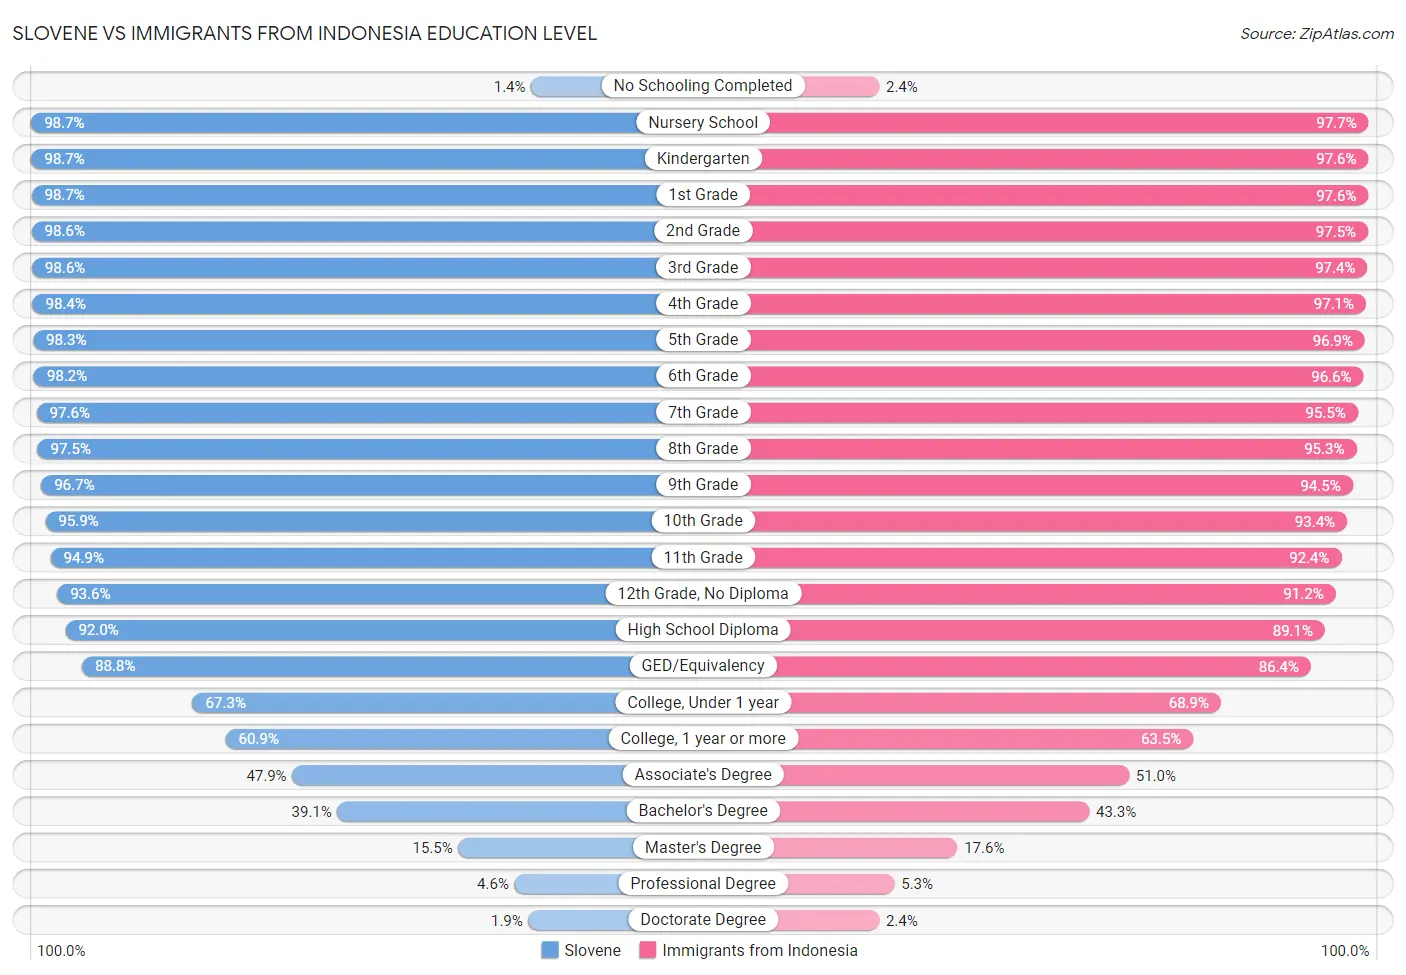 Slovene vs Immigrants from Indonesia Education Level